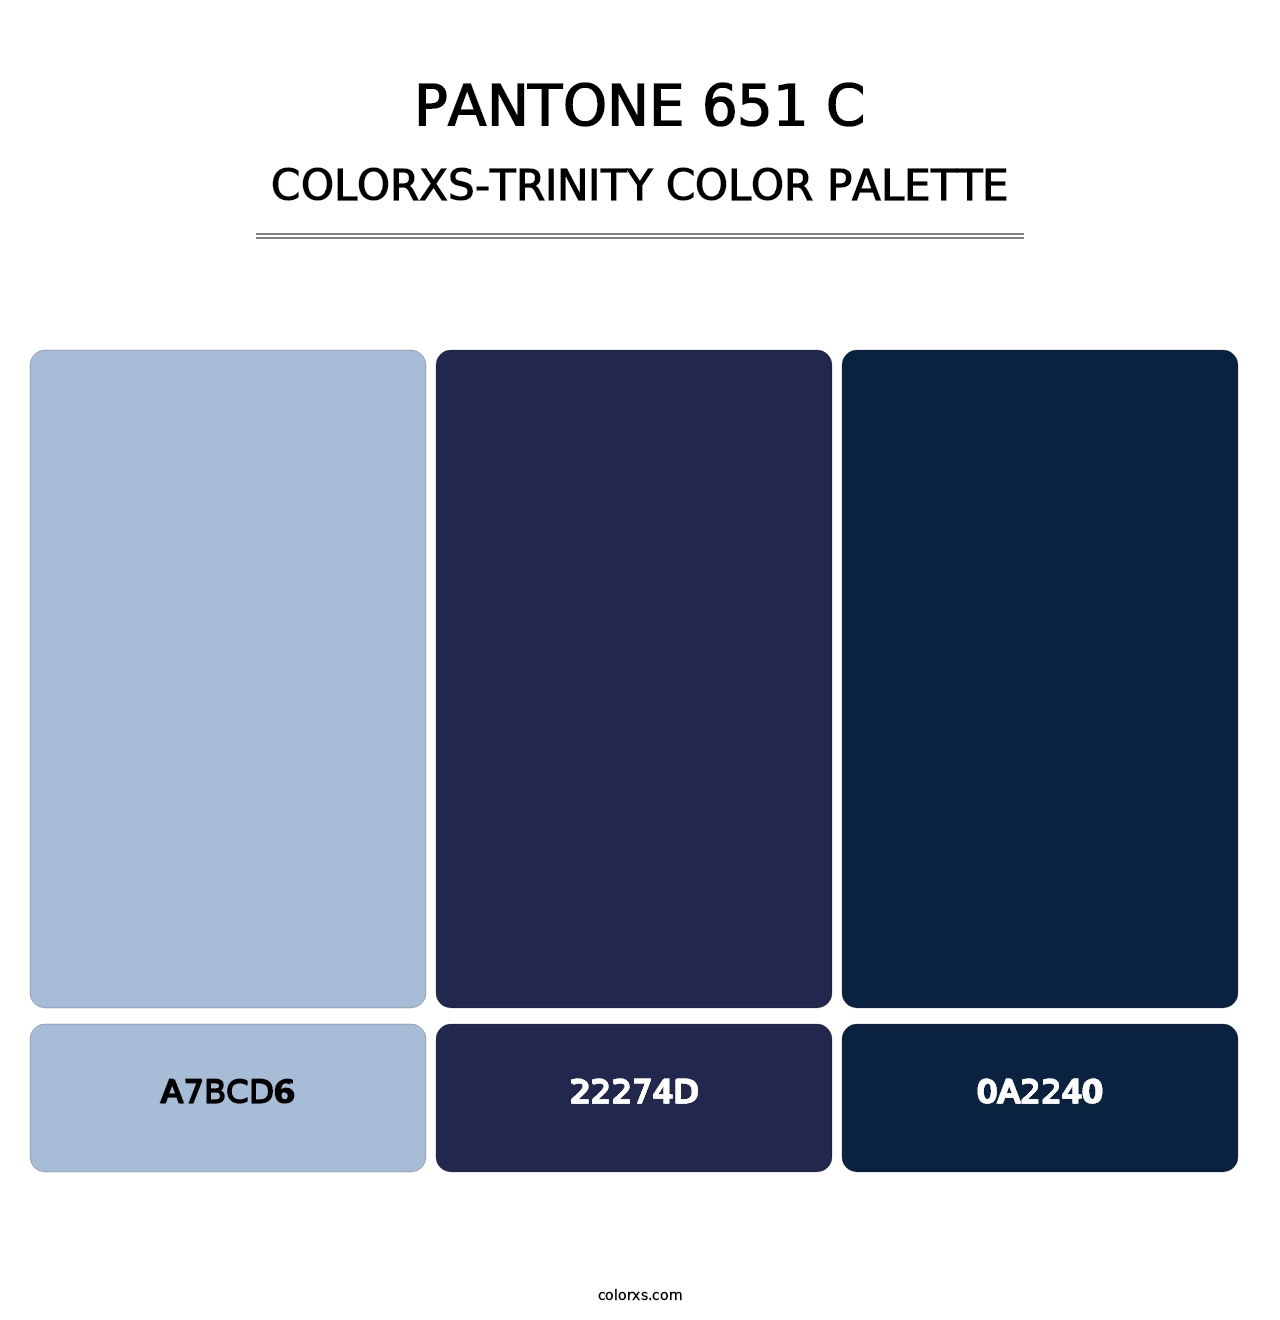 PANTONE 651 C - Colorxs Trinity Palette